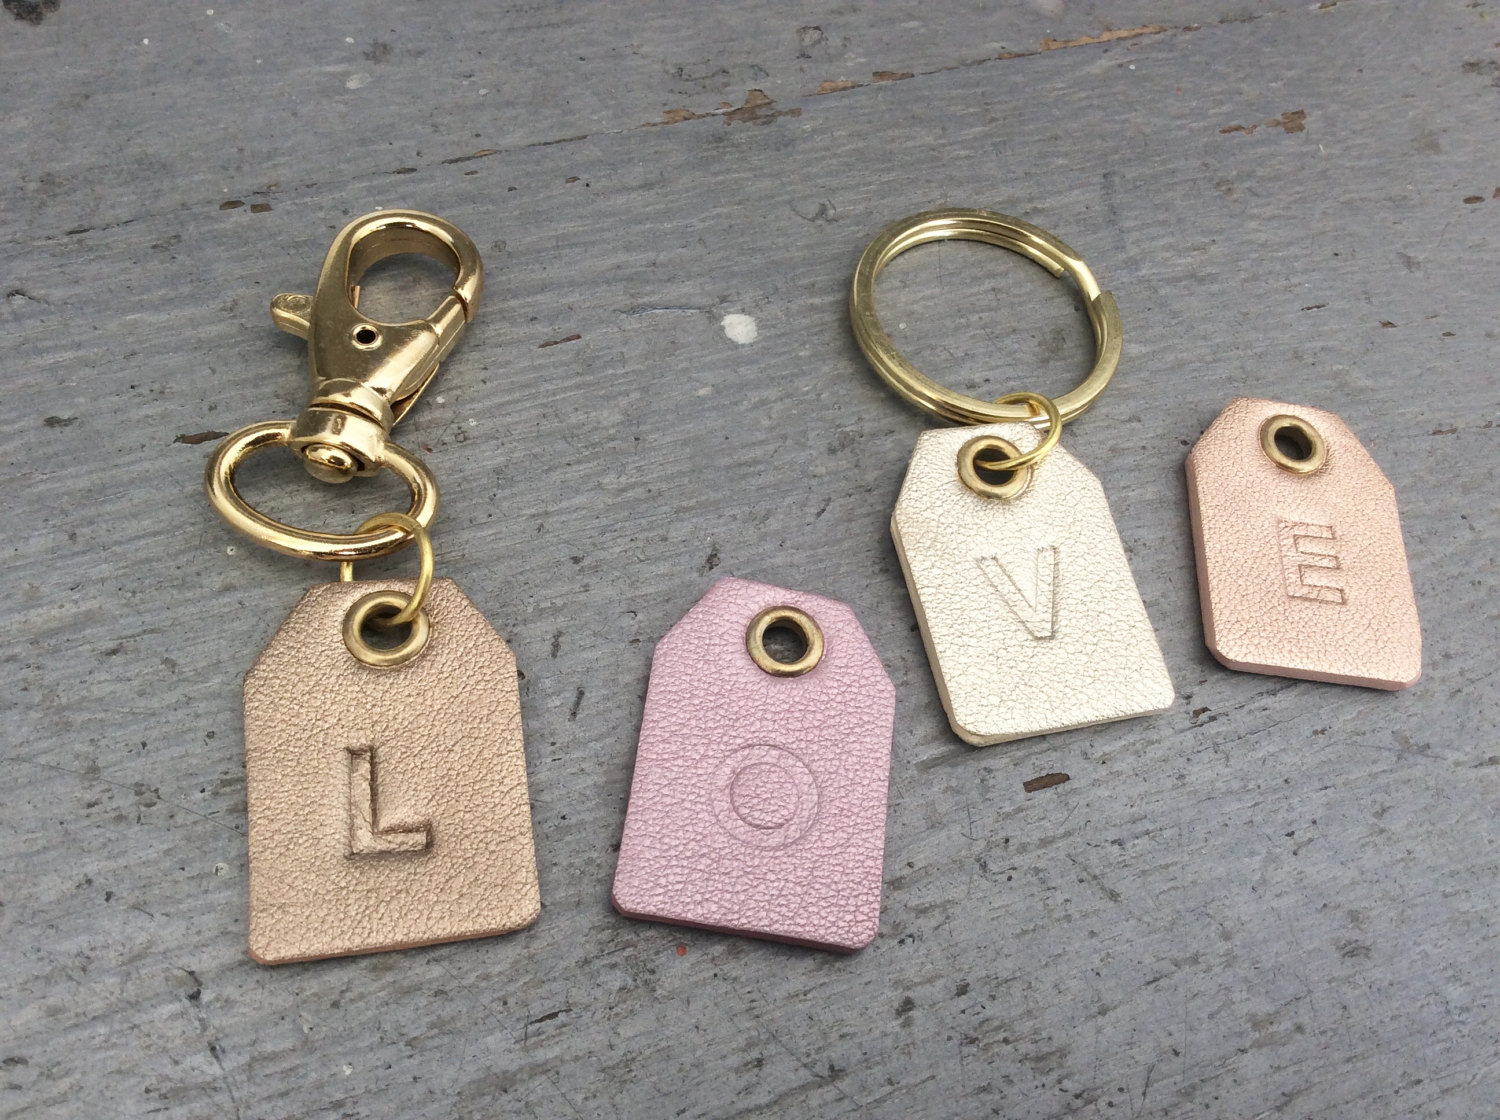 leather tassel keychains via http://etsy.me/2mRQX6m